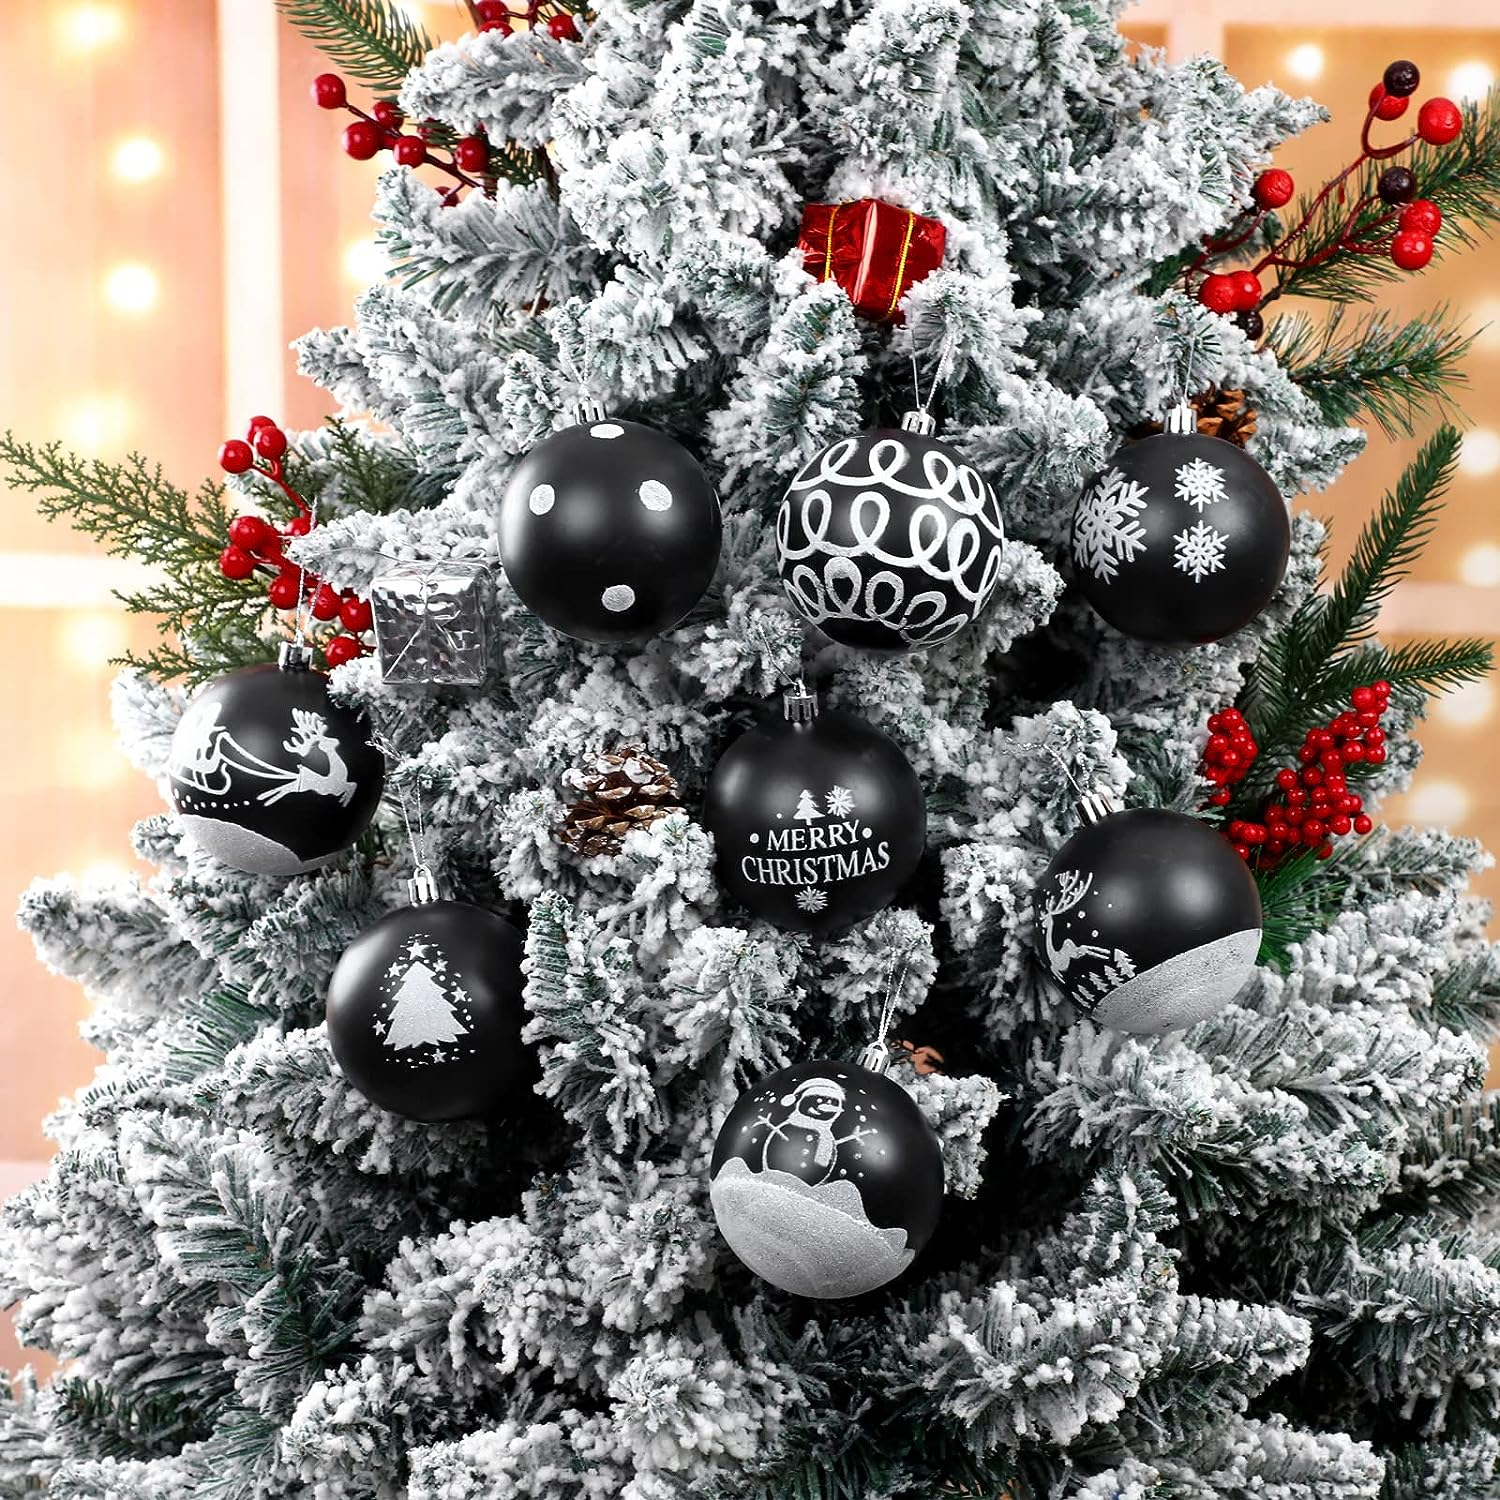 Vinyl decorated black Christmas ornaments